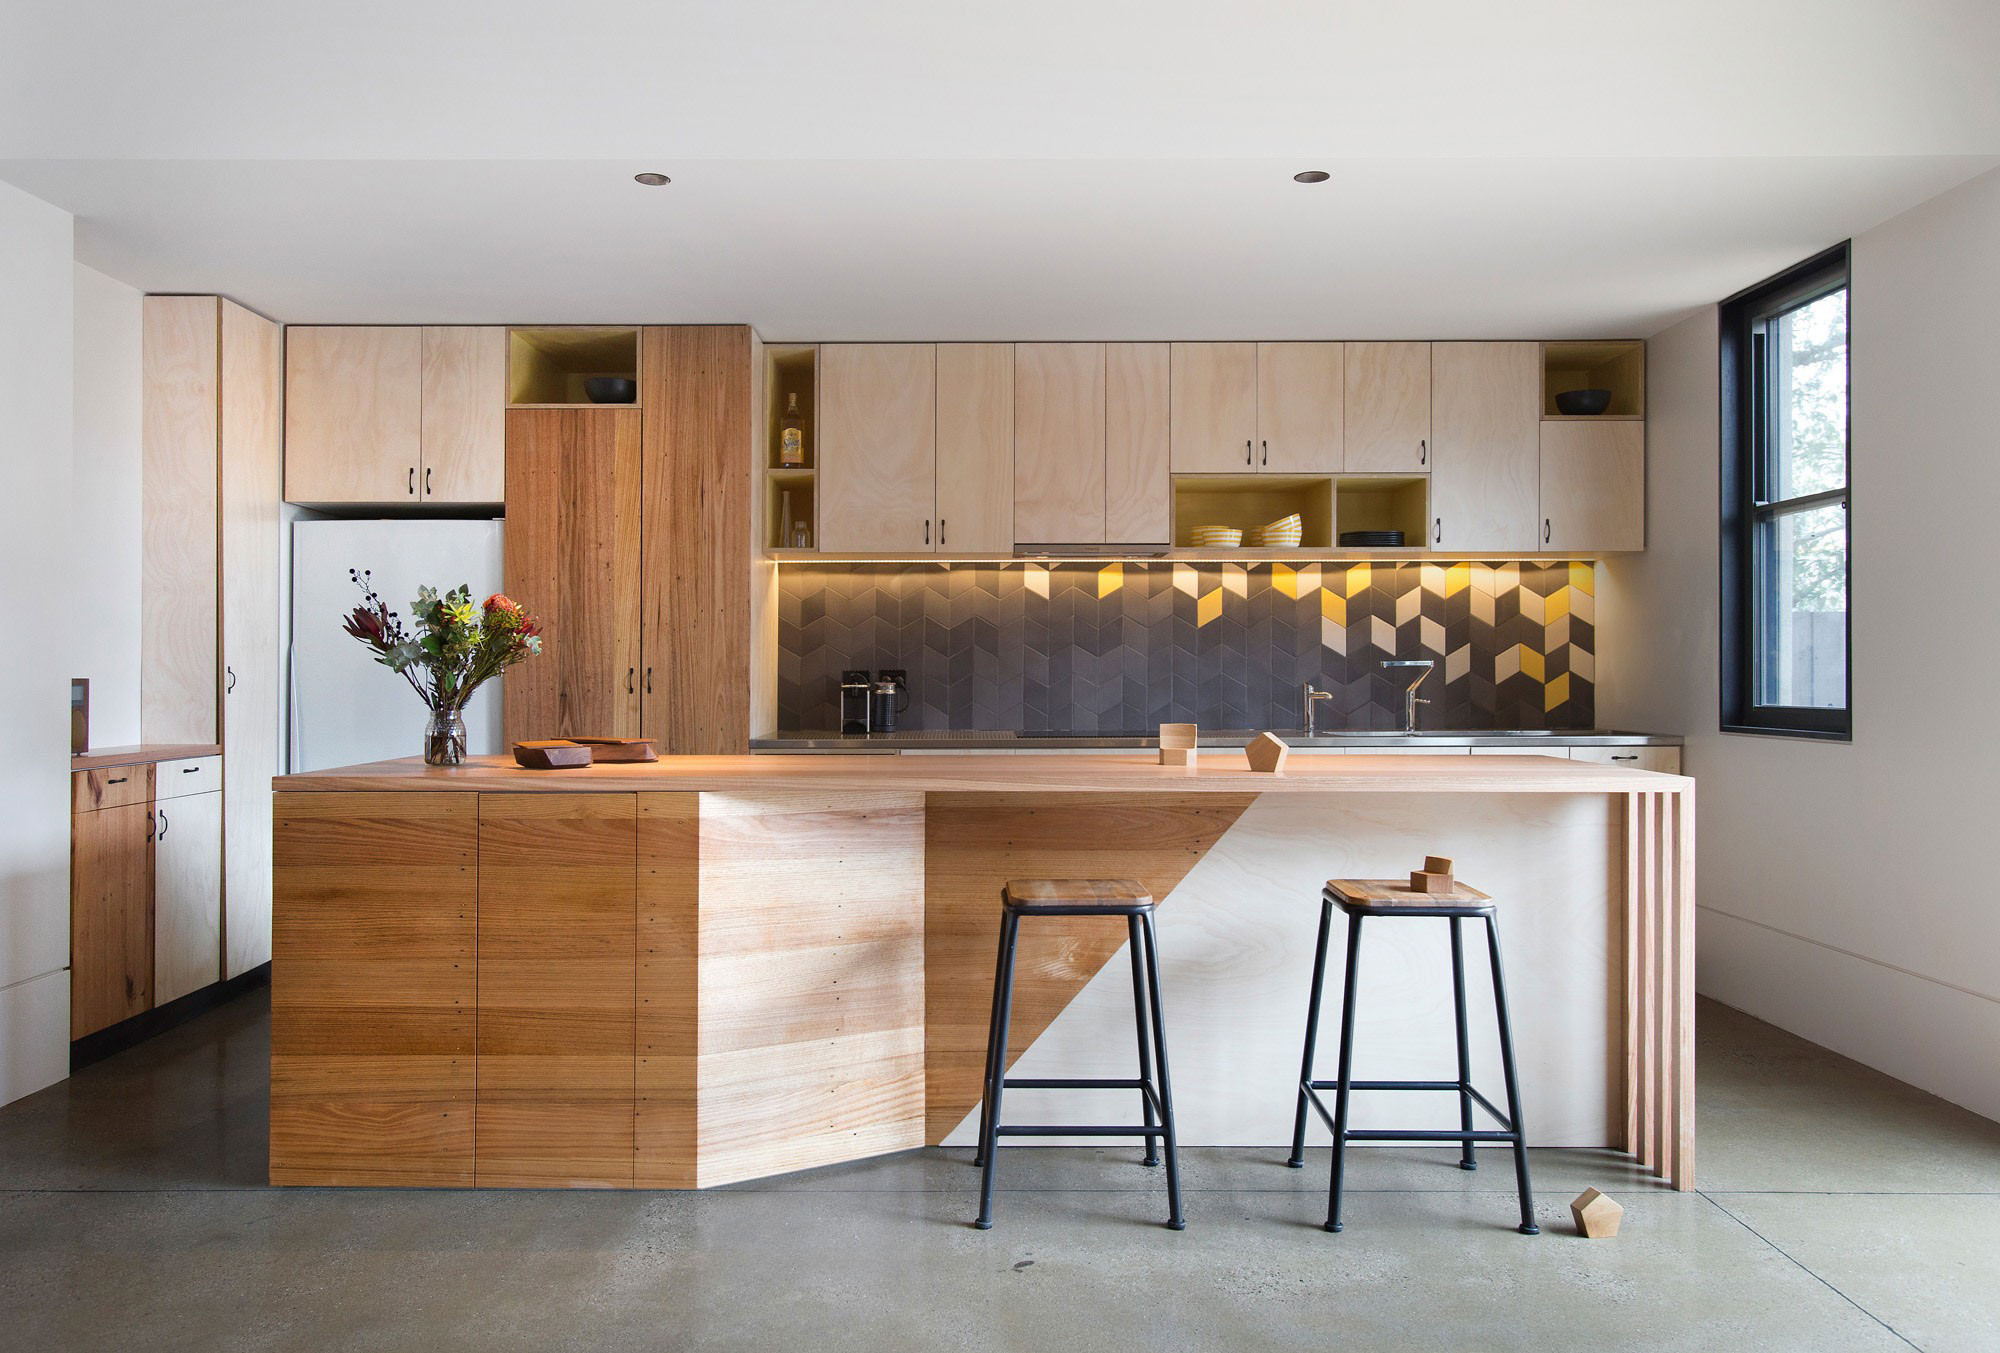 Best ideas about New Kitchen Ideas
. Save or Pin 50 Best Modern Kitchen Design Ideas for 2019 Now.